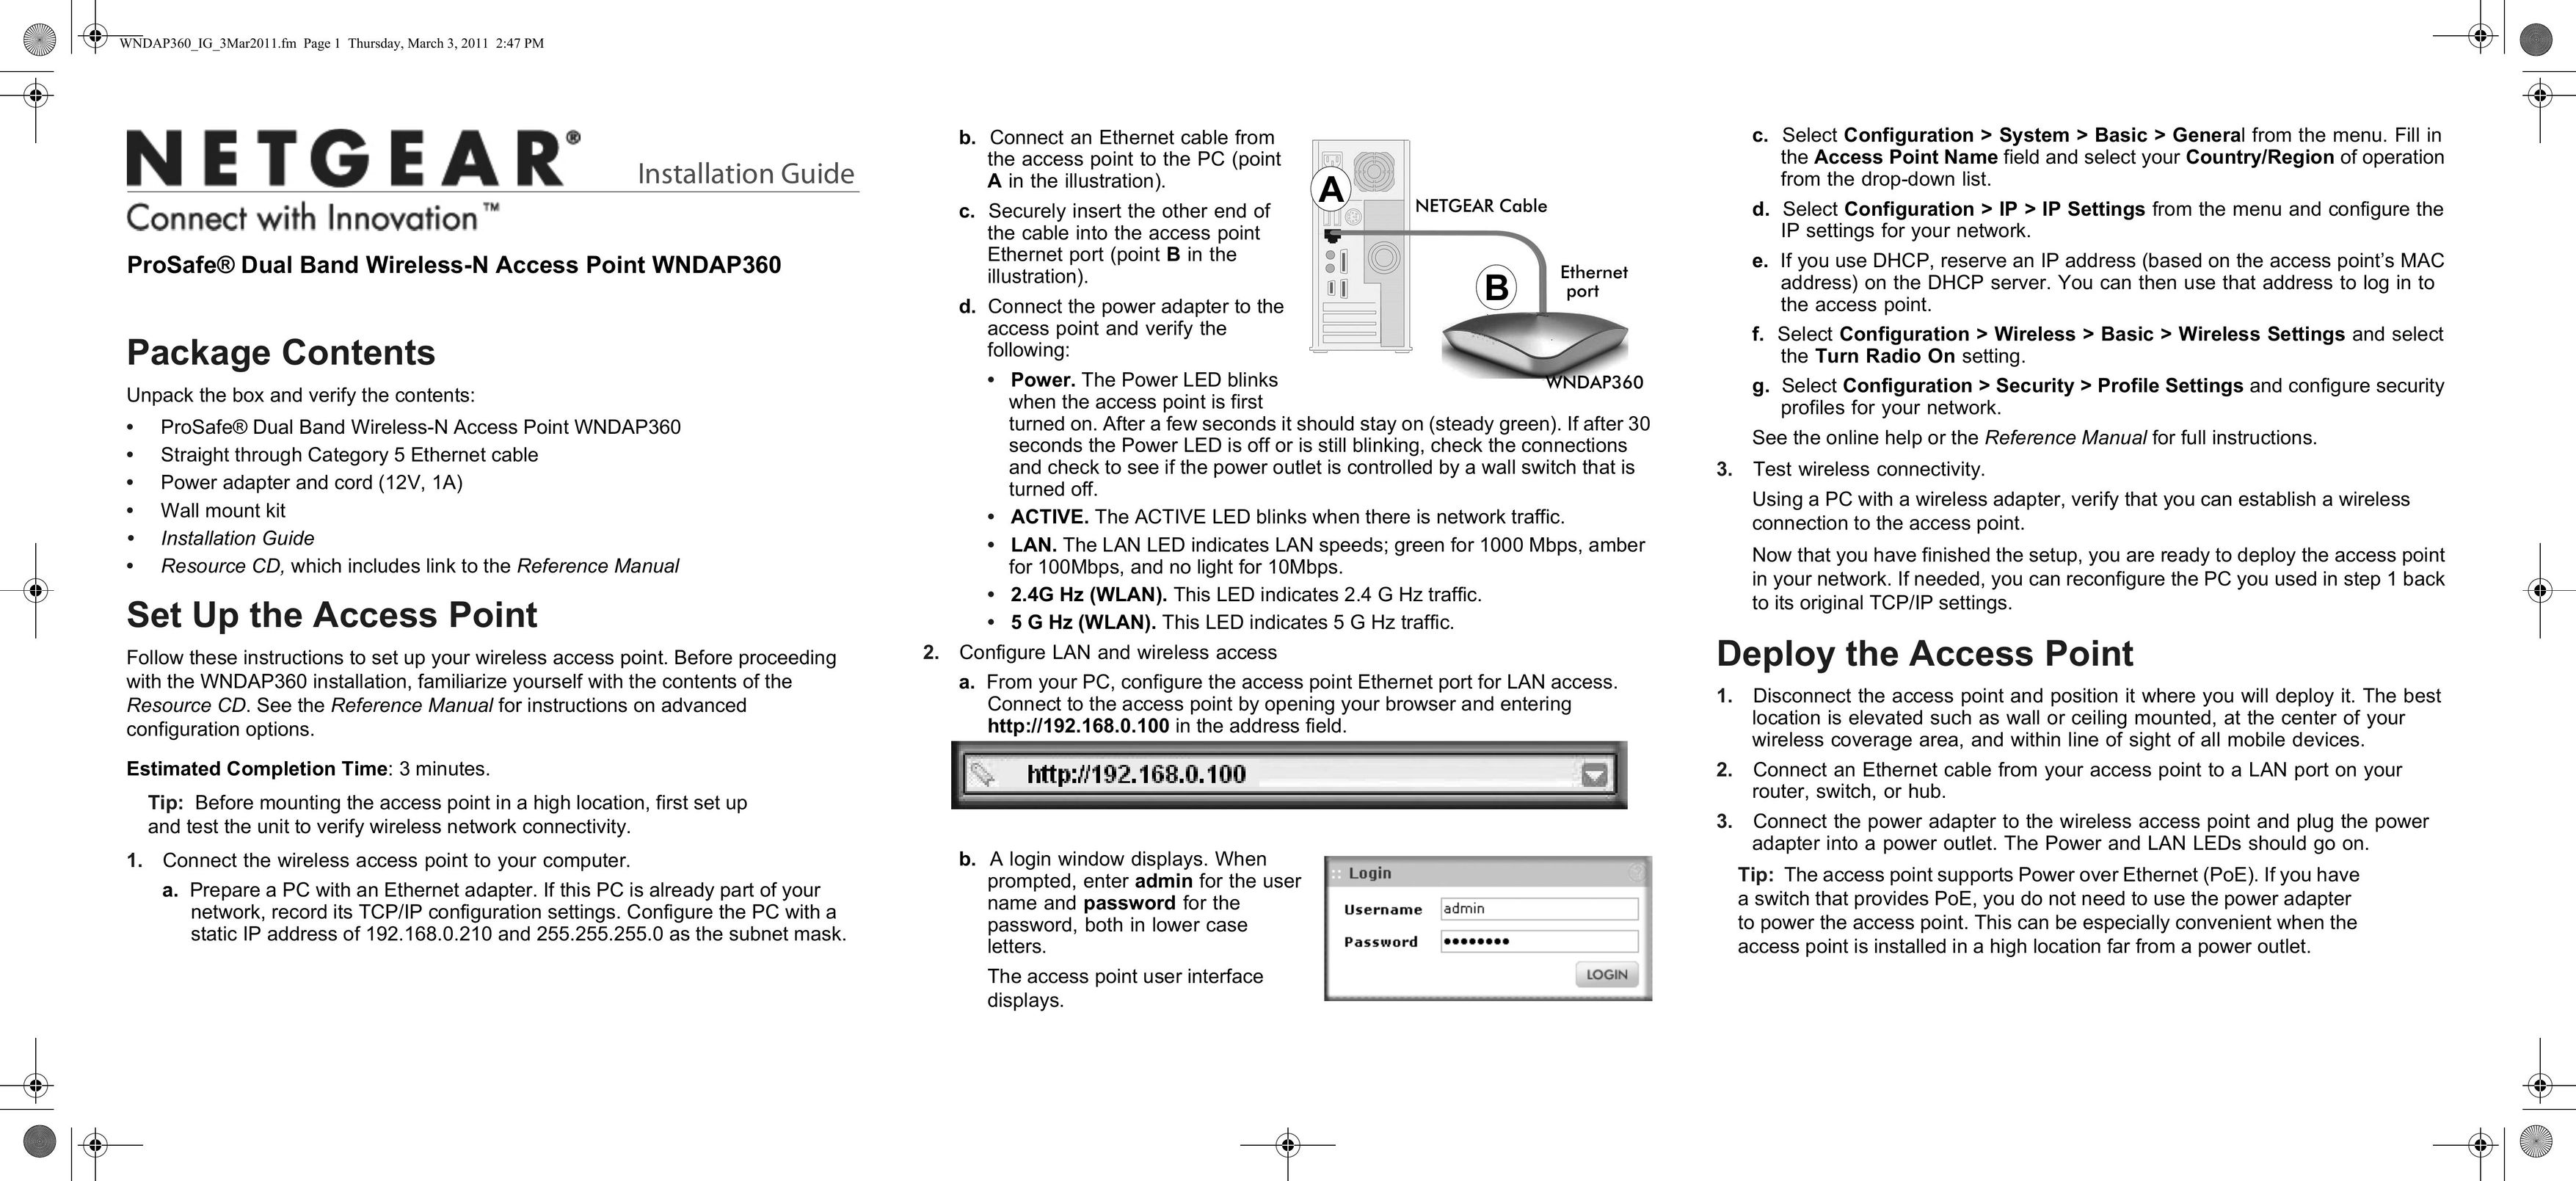 NETGEAR WNDAP360-100NAS Network Hardware User Manual